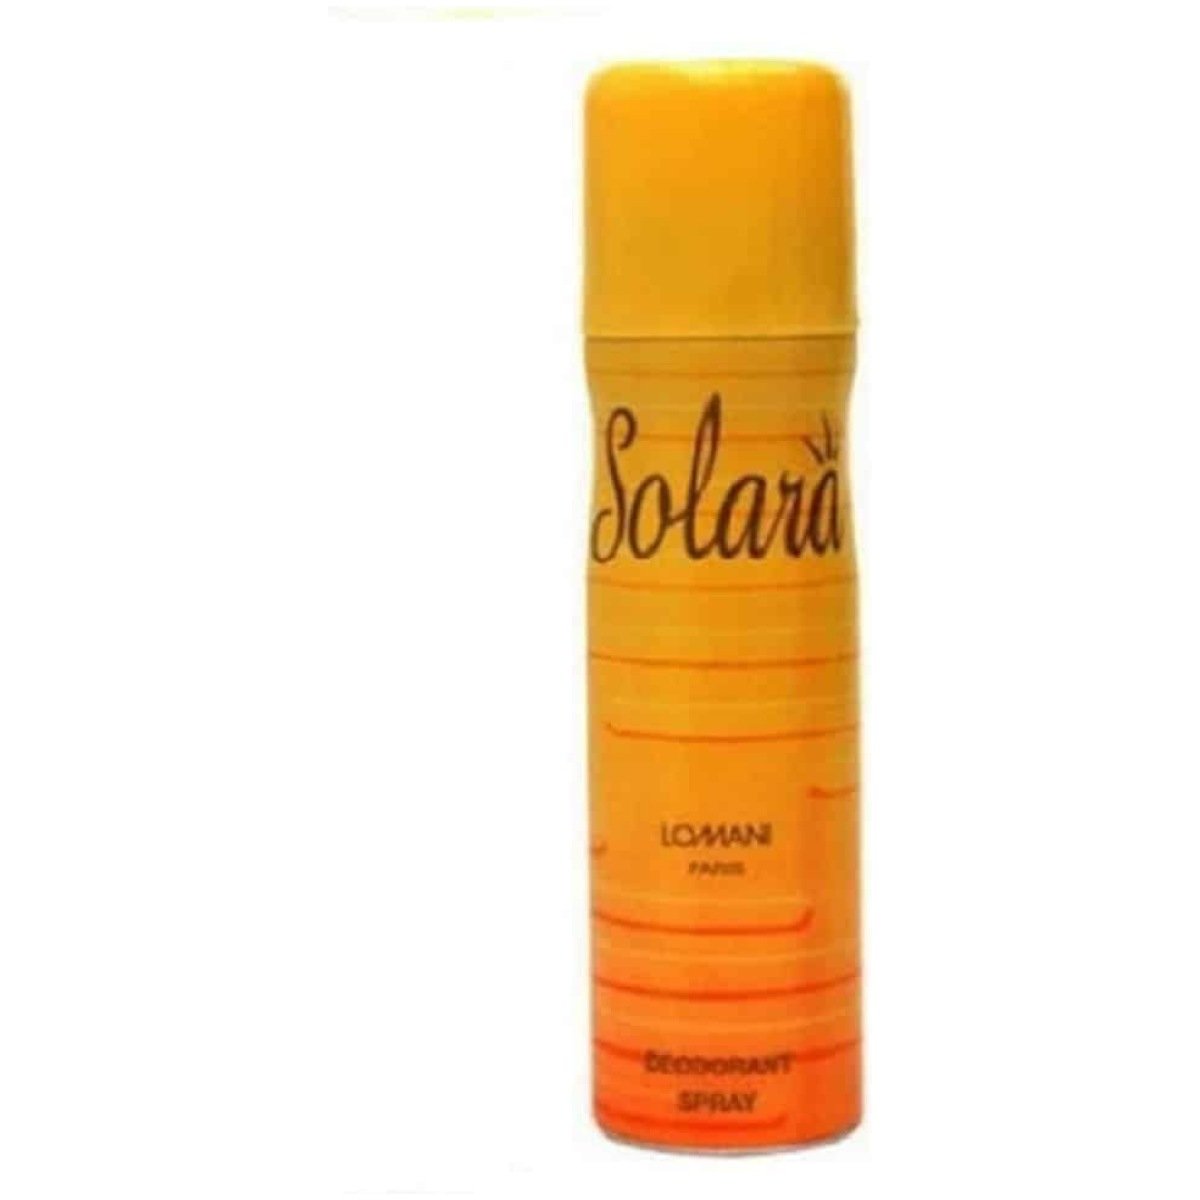 Lomani Solara Deodorant Spray 150ml